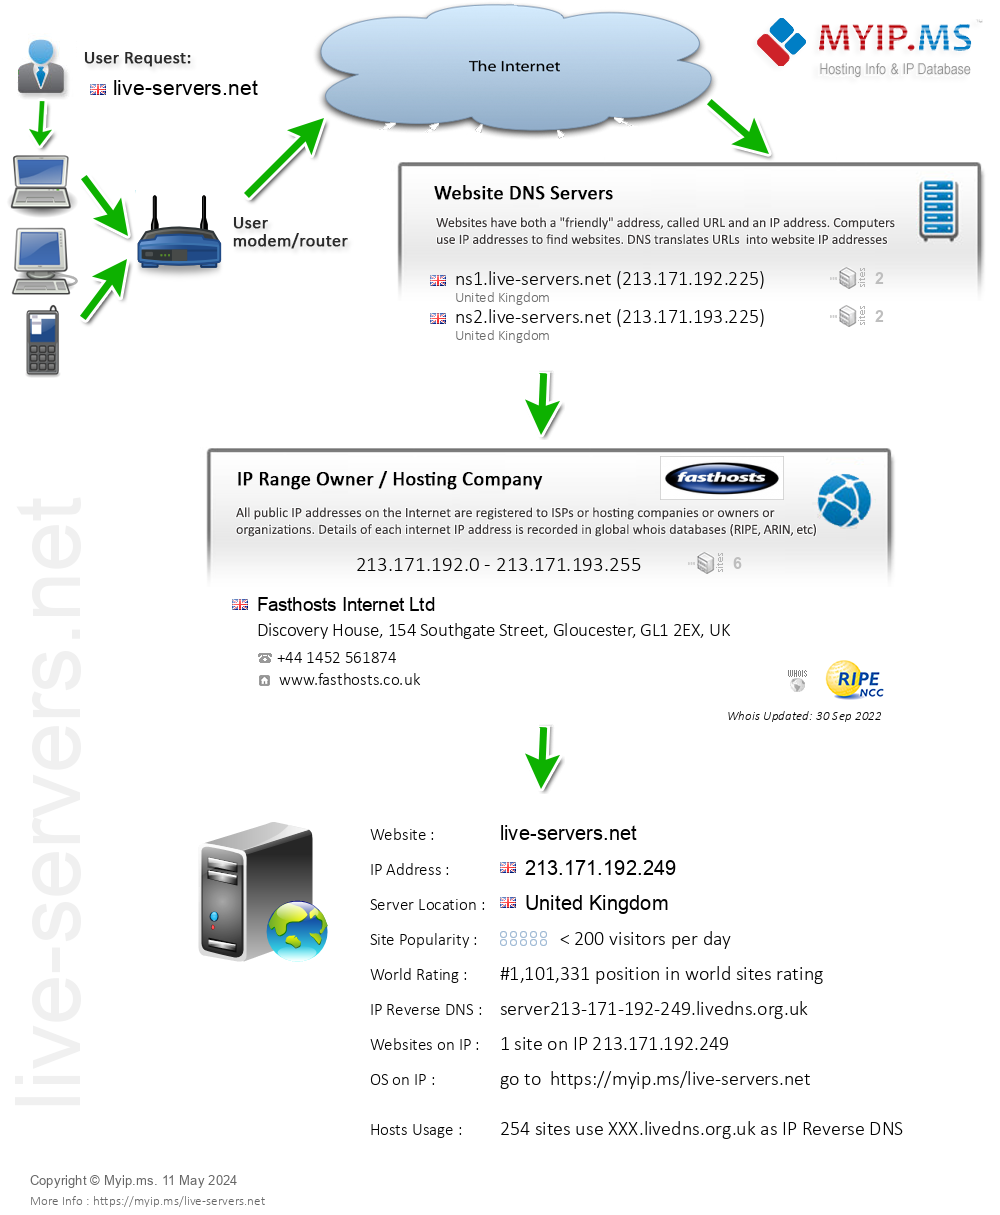 Live-servers.net - Website Hosting Visual IP Diagram